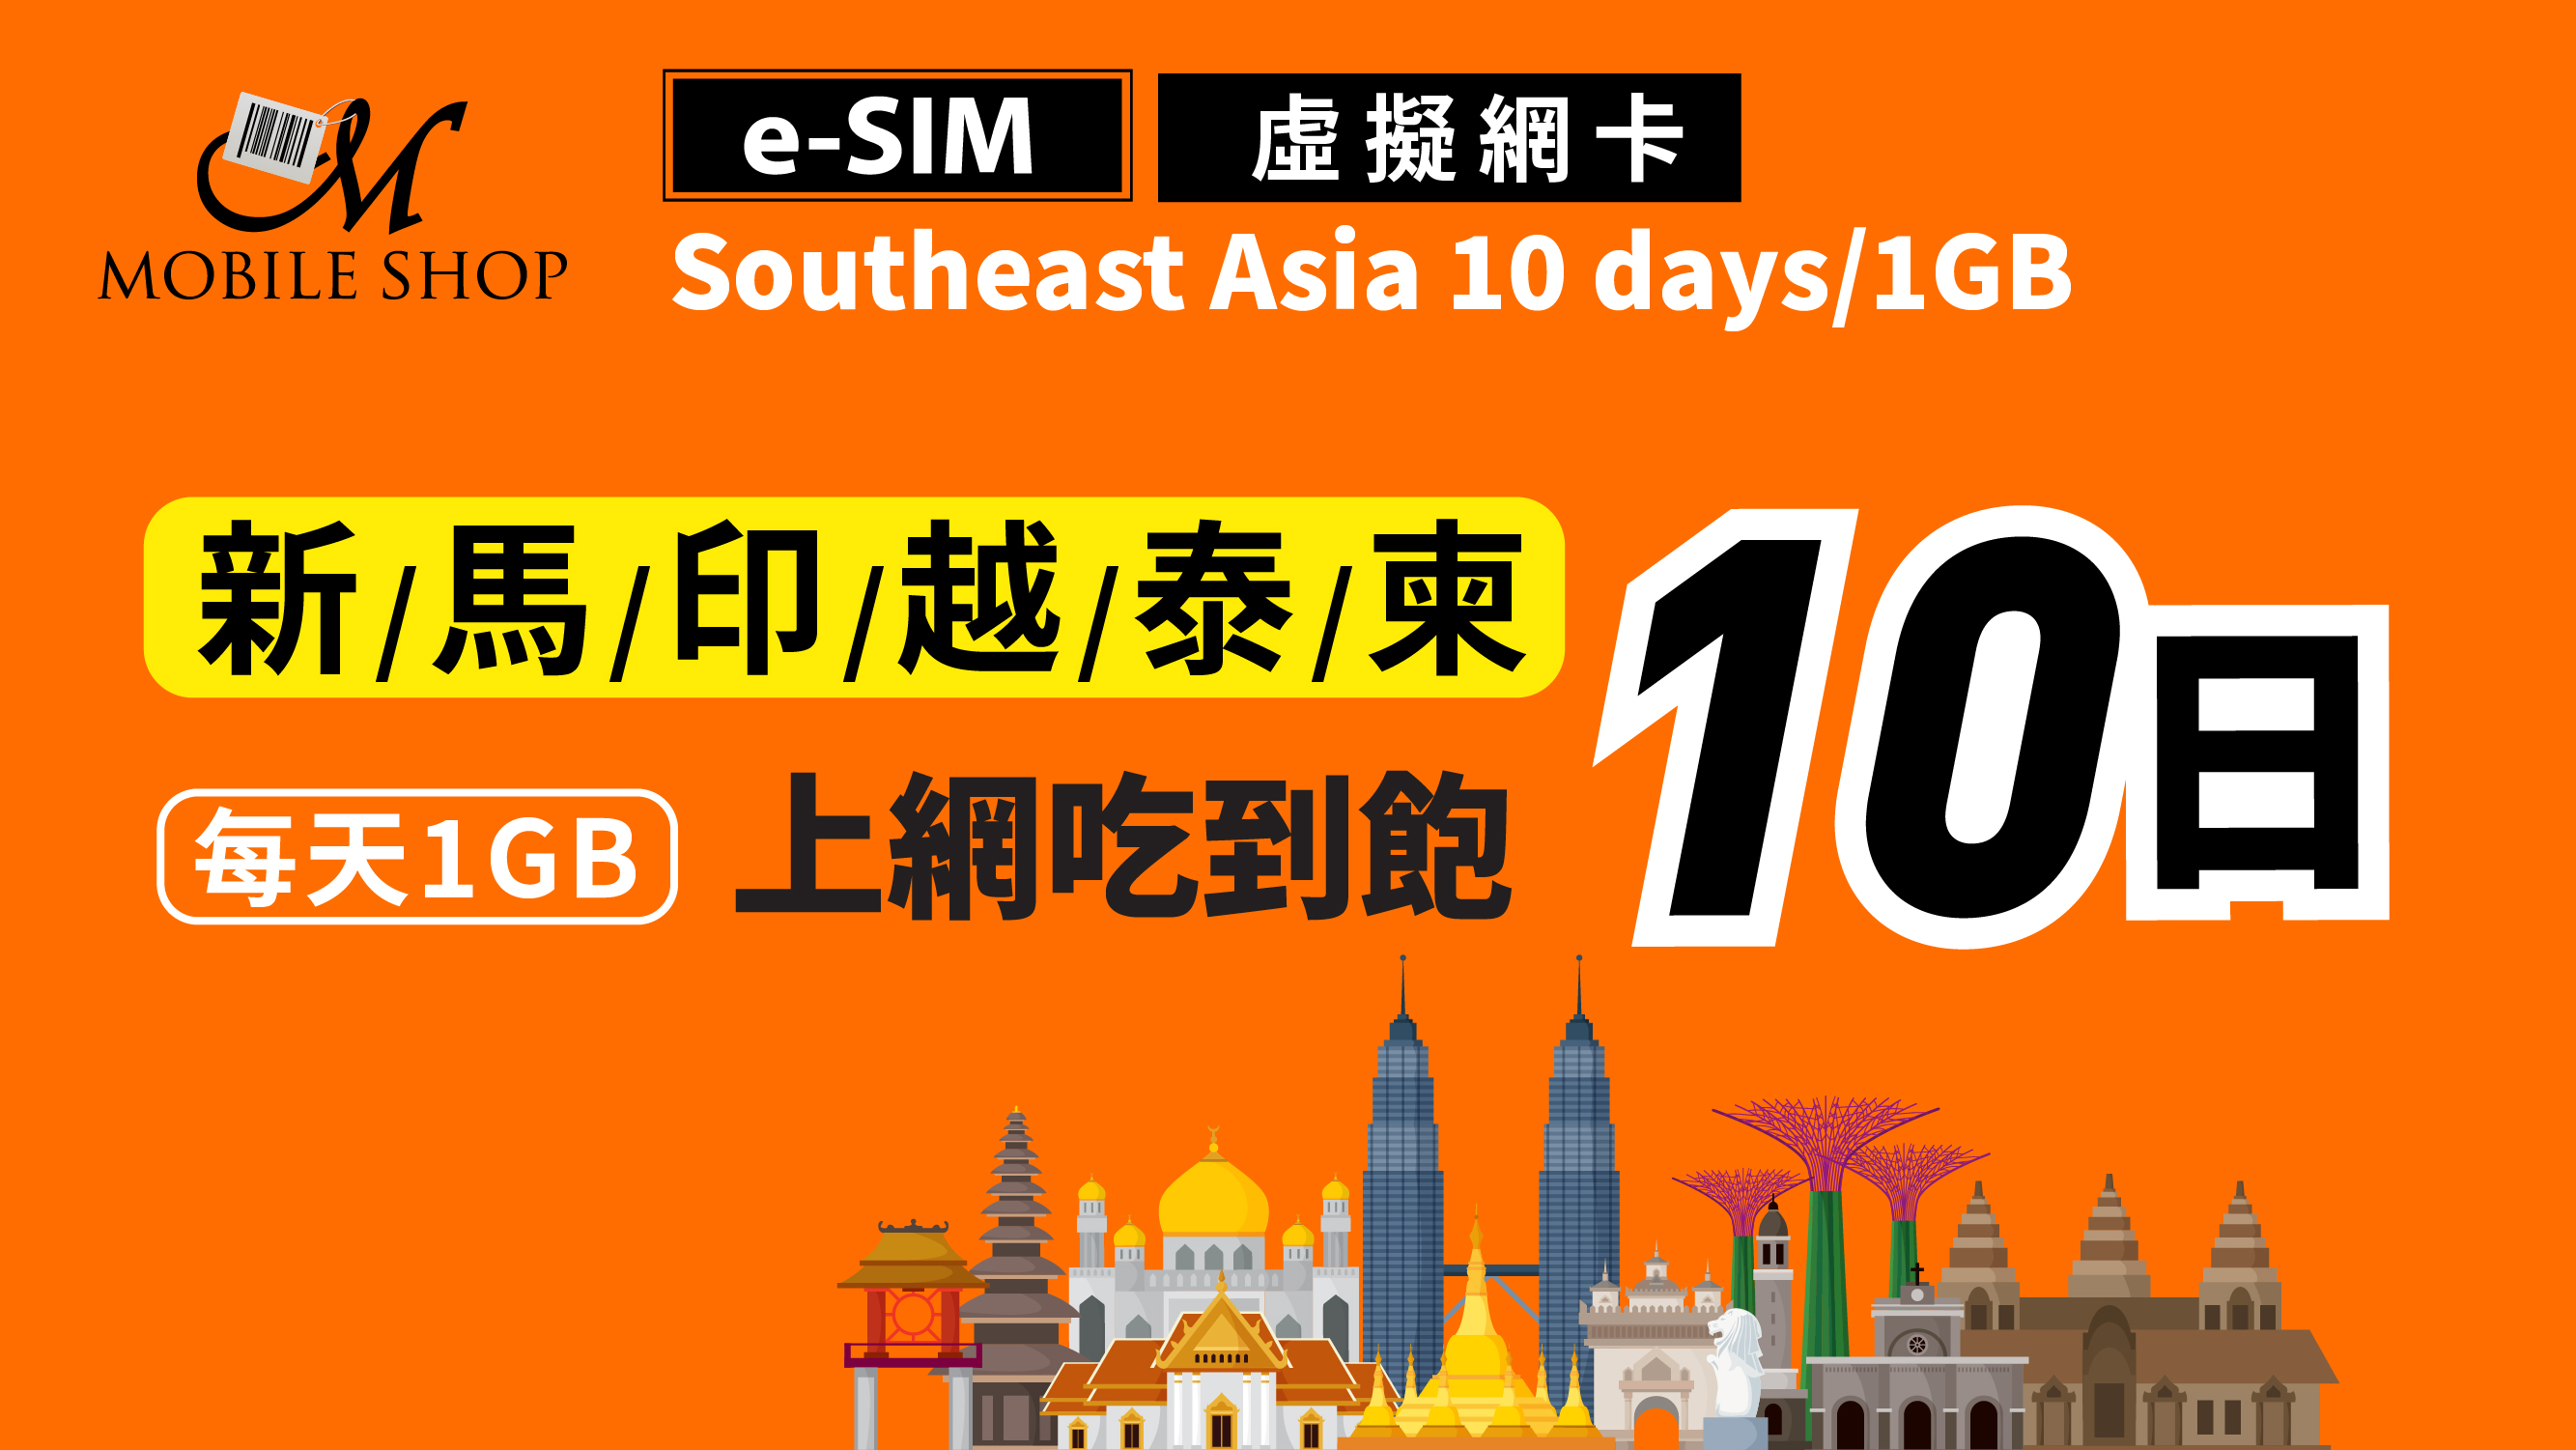 eSIM Southeast Asia 10days/1GB day unlimited data